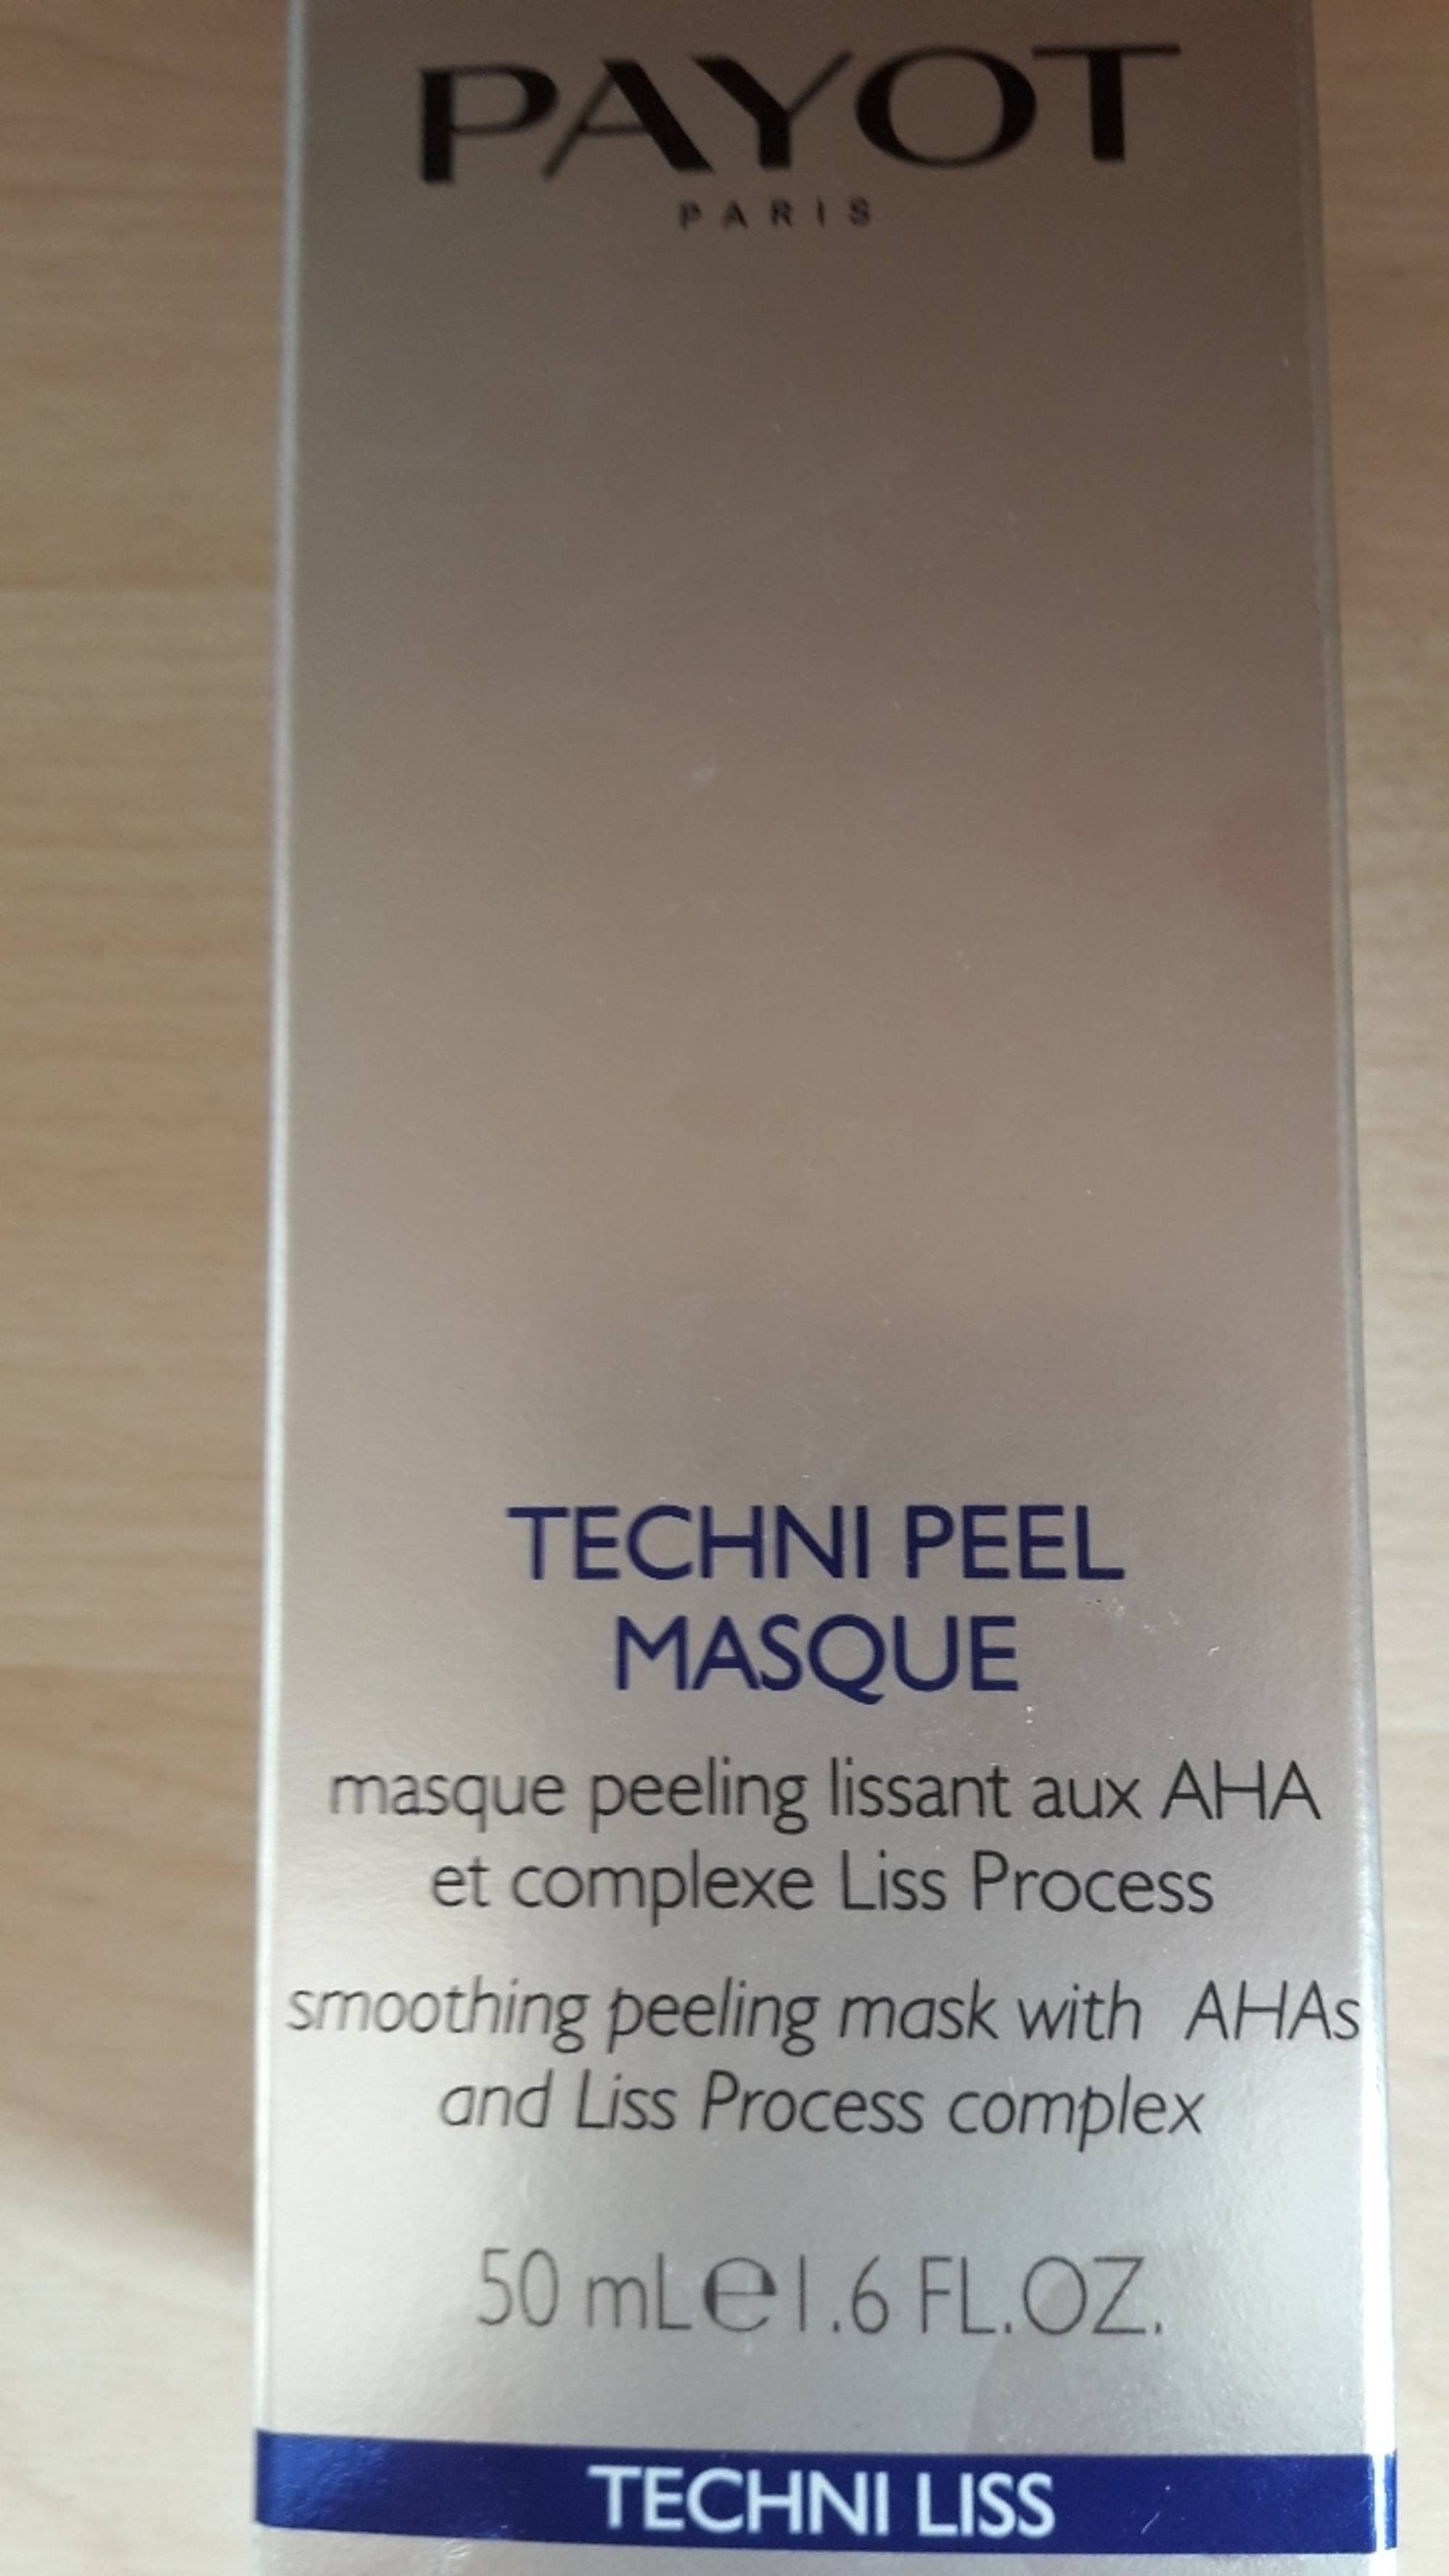 PAYOT - Techni liss - Masque peeling lissant